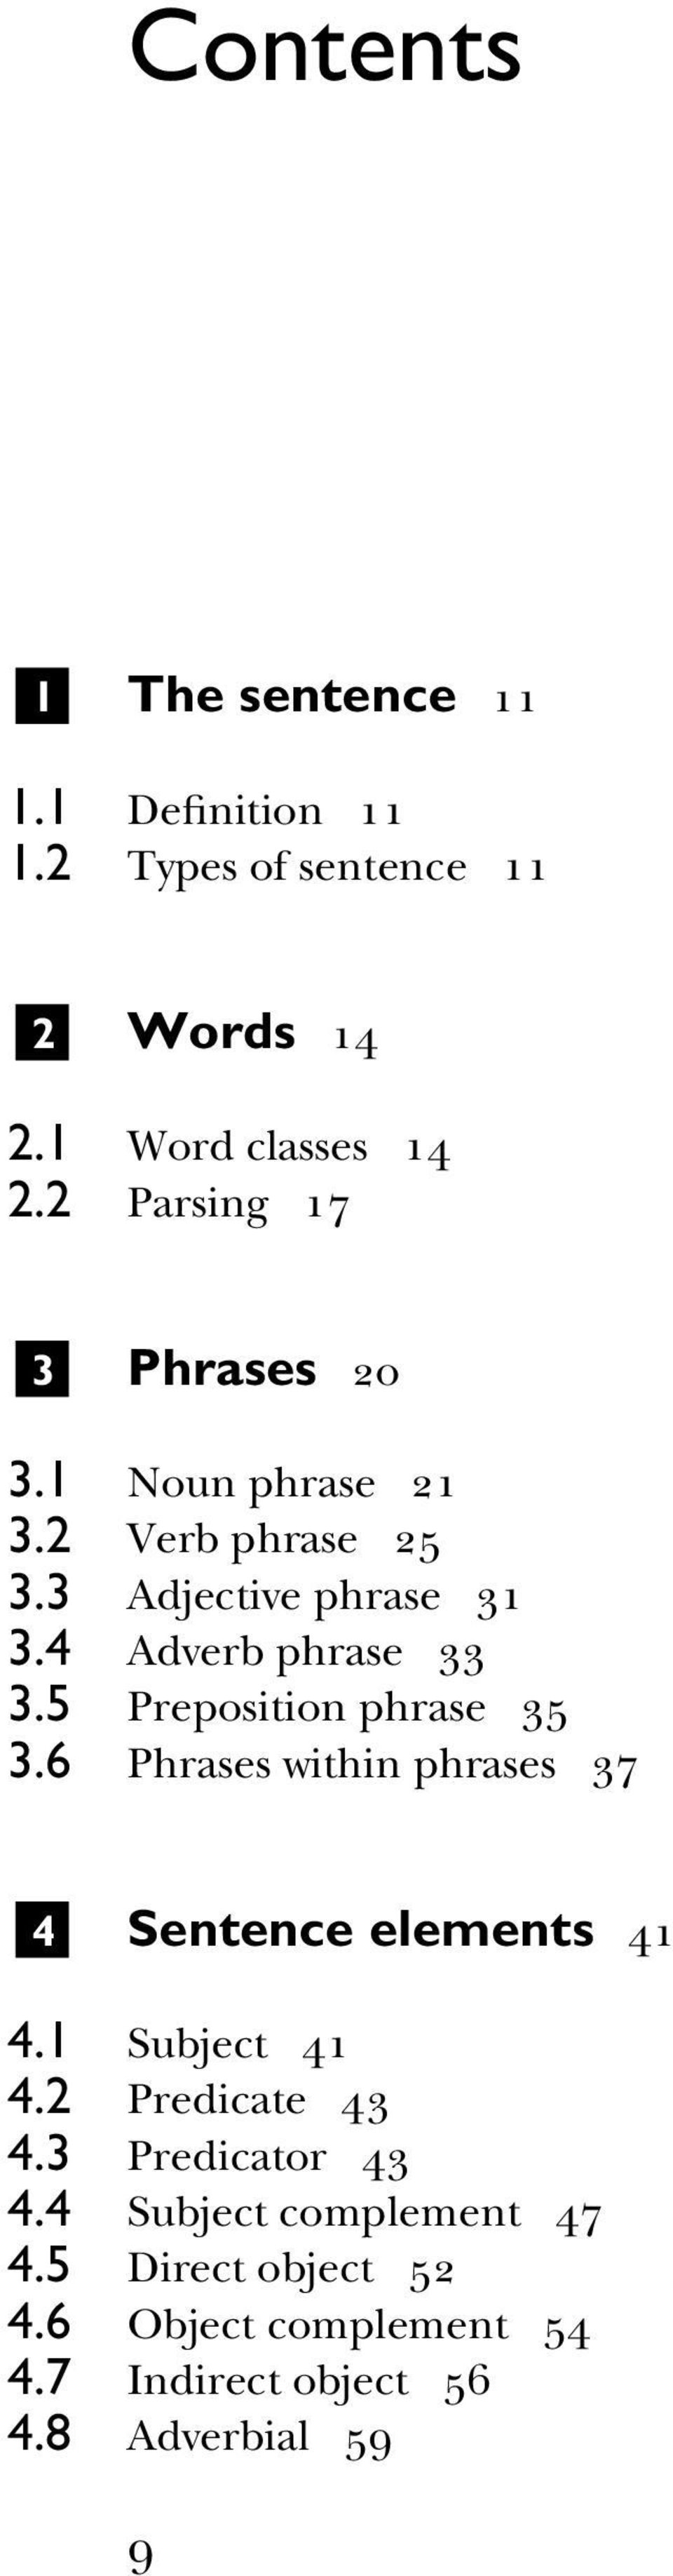 5 Preposition phrase 35 3.6 Phrases within phrases 37 4 Sentence elements 41 4.1 Subject 41 4.2 Predicate 43 4.